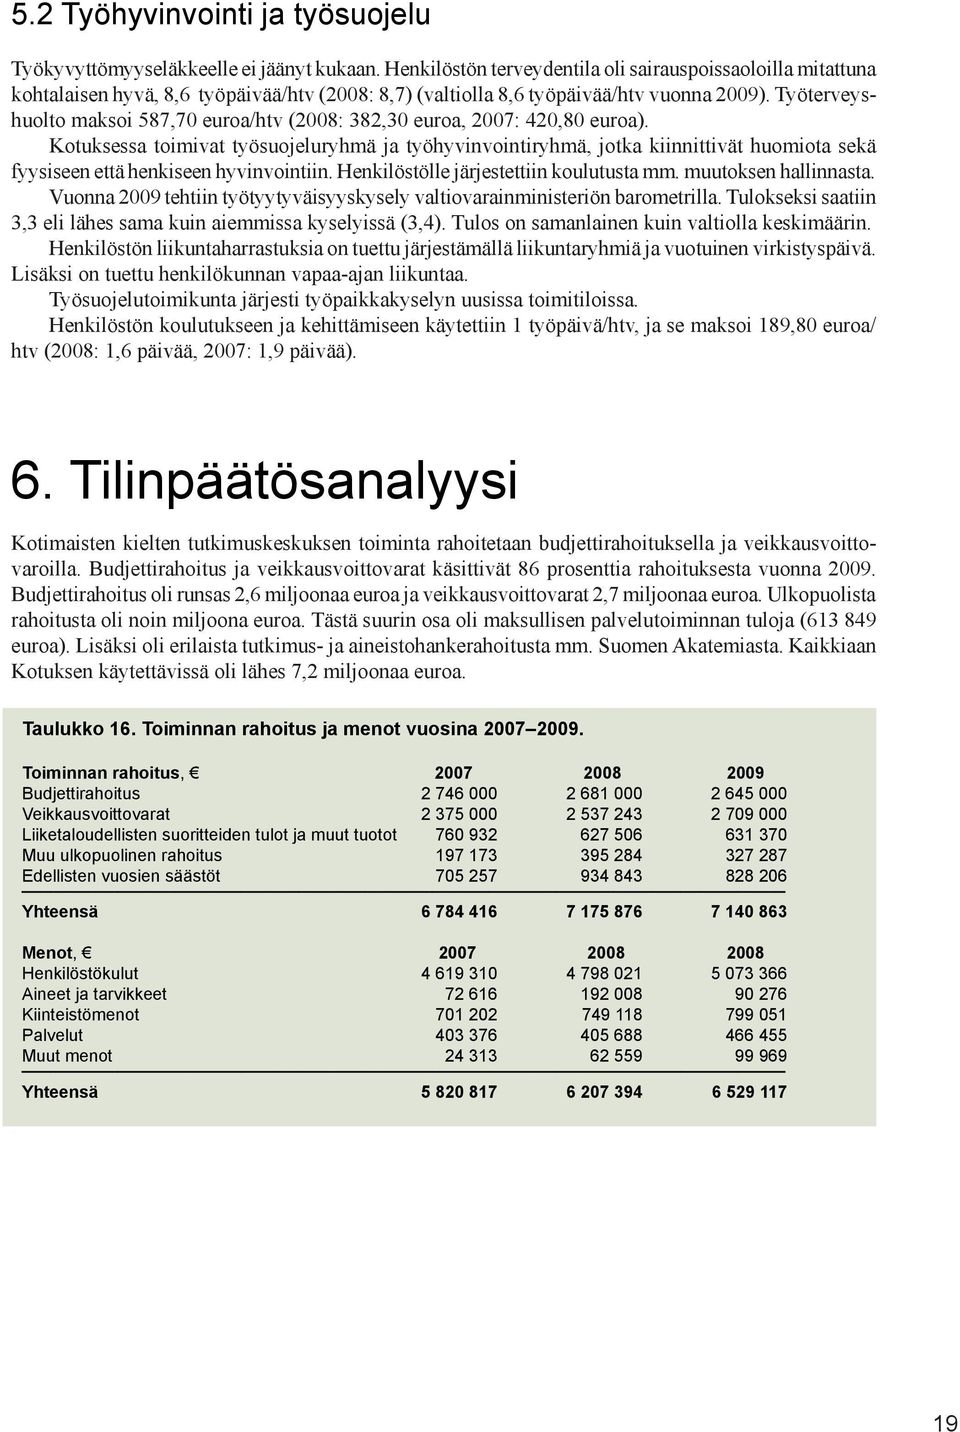 Työterveyshuolto maksoi 587,70 euroa/htv (2008: 382,30 euroa, 2007: 420,80 euroa).